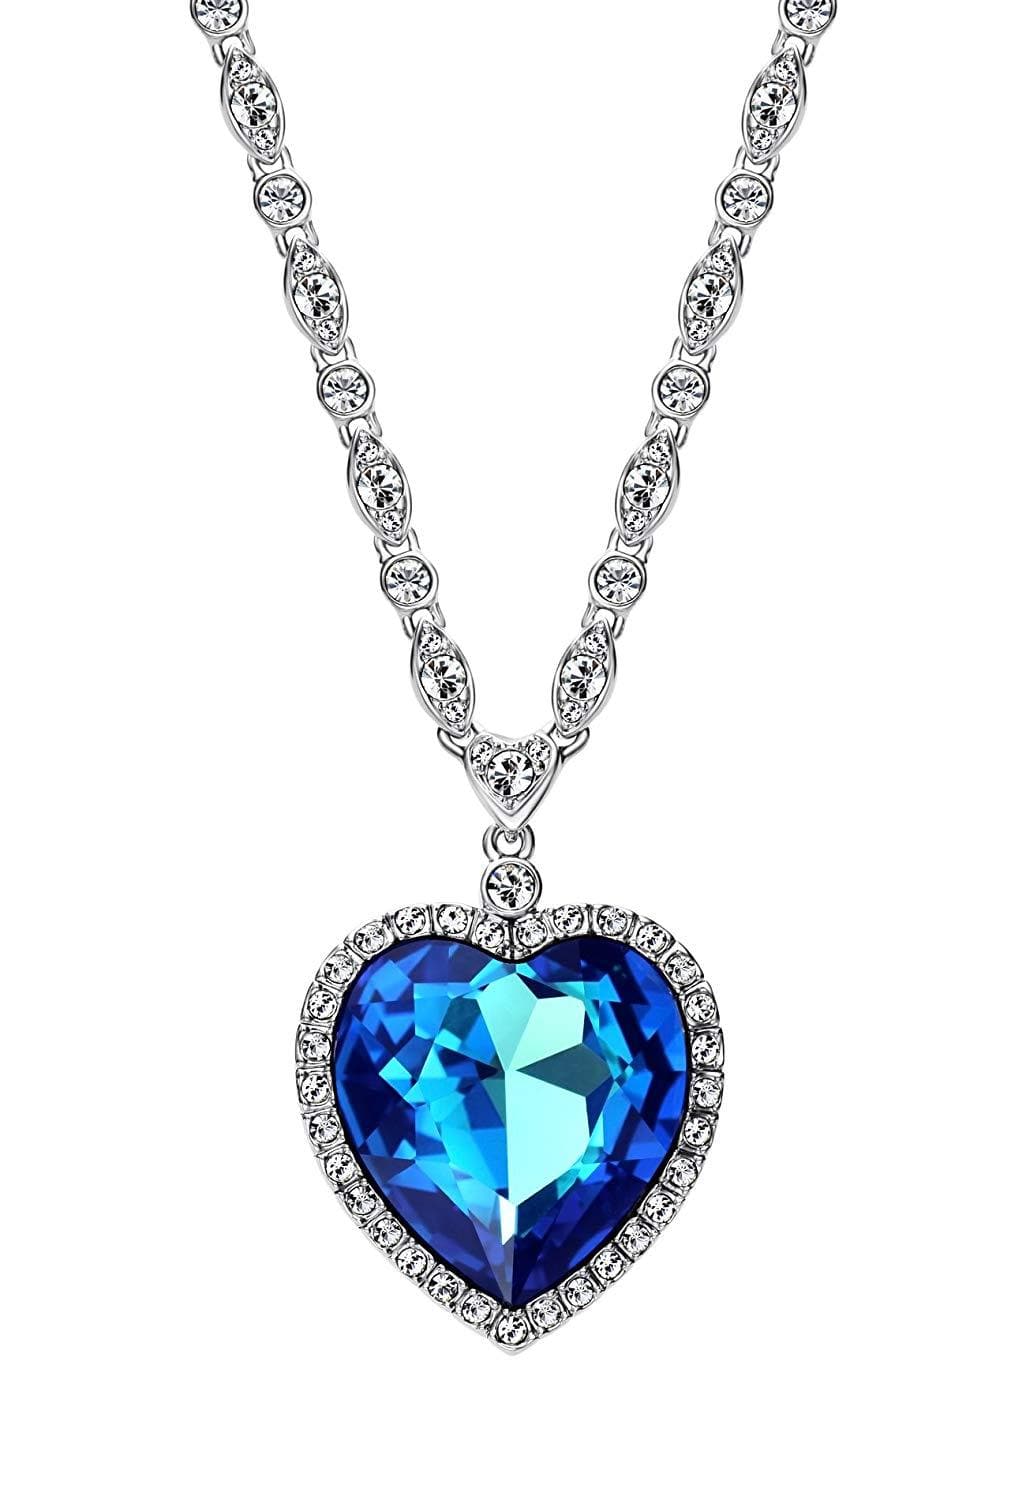 Swarovski Elements Crystal Fashion Jewellery Pendant Necklace